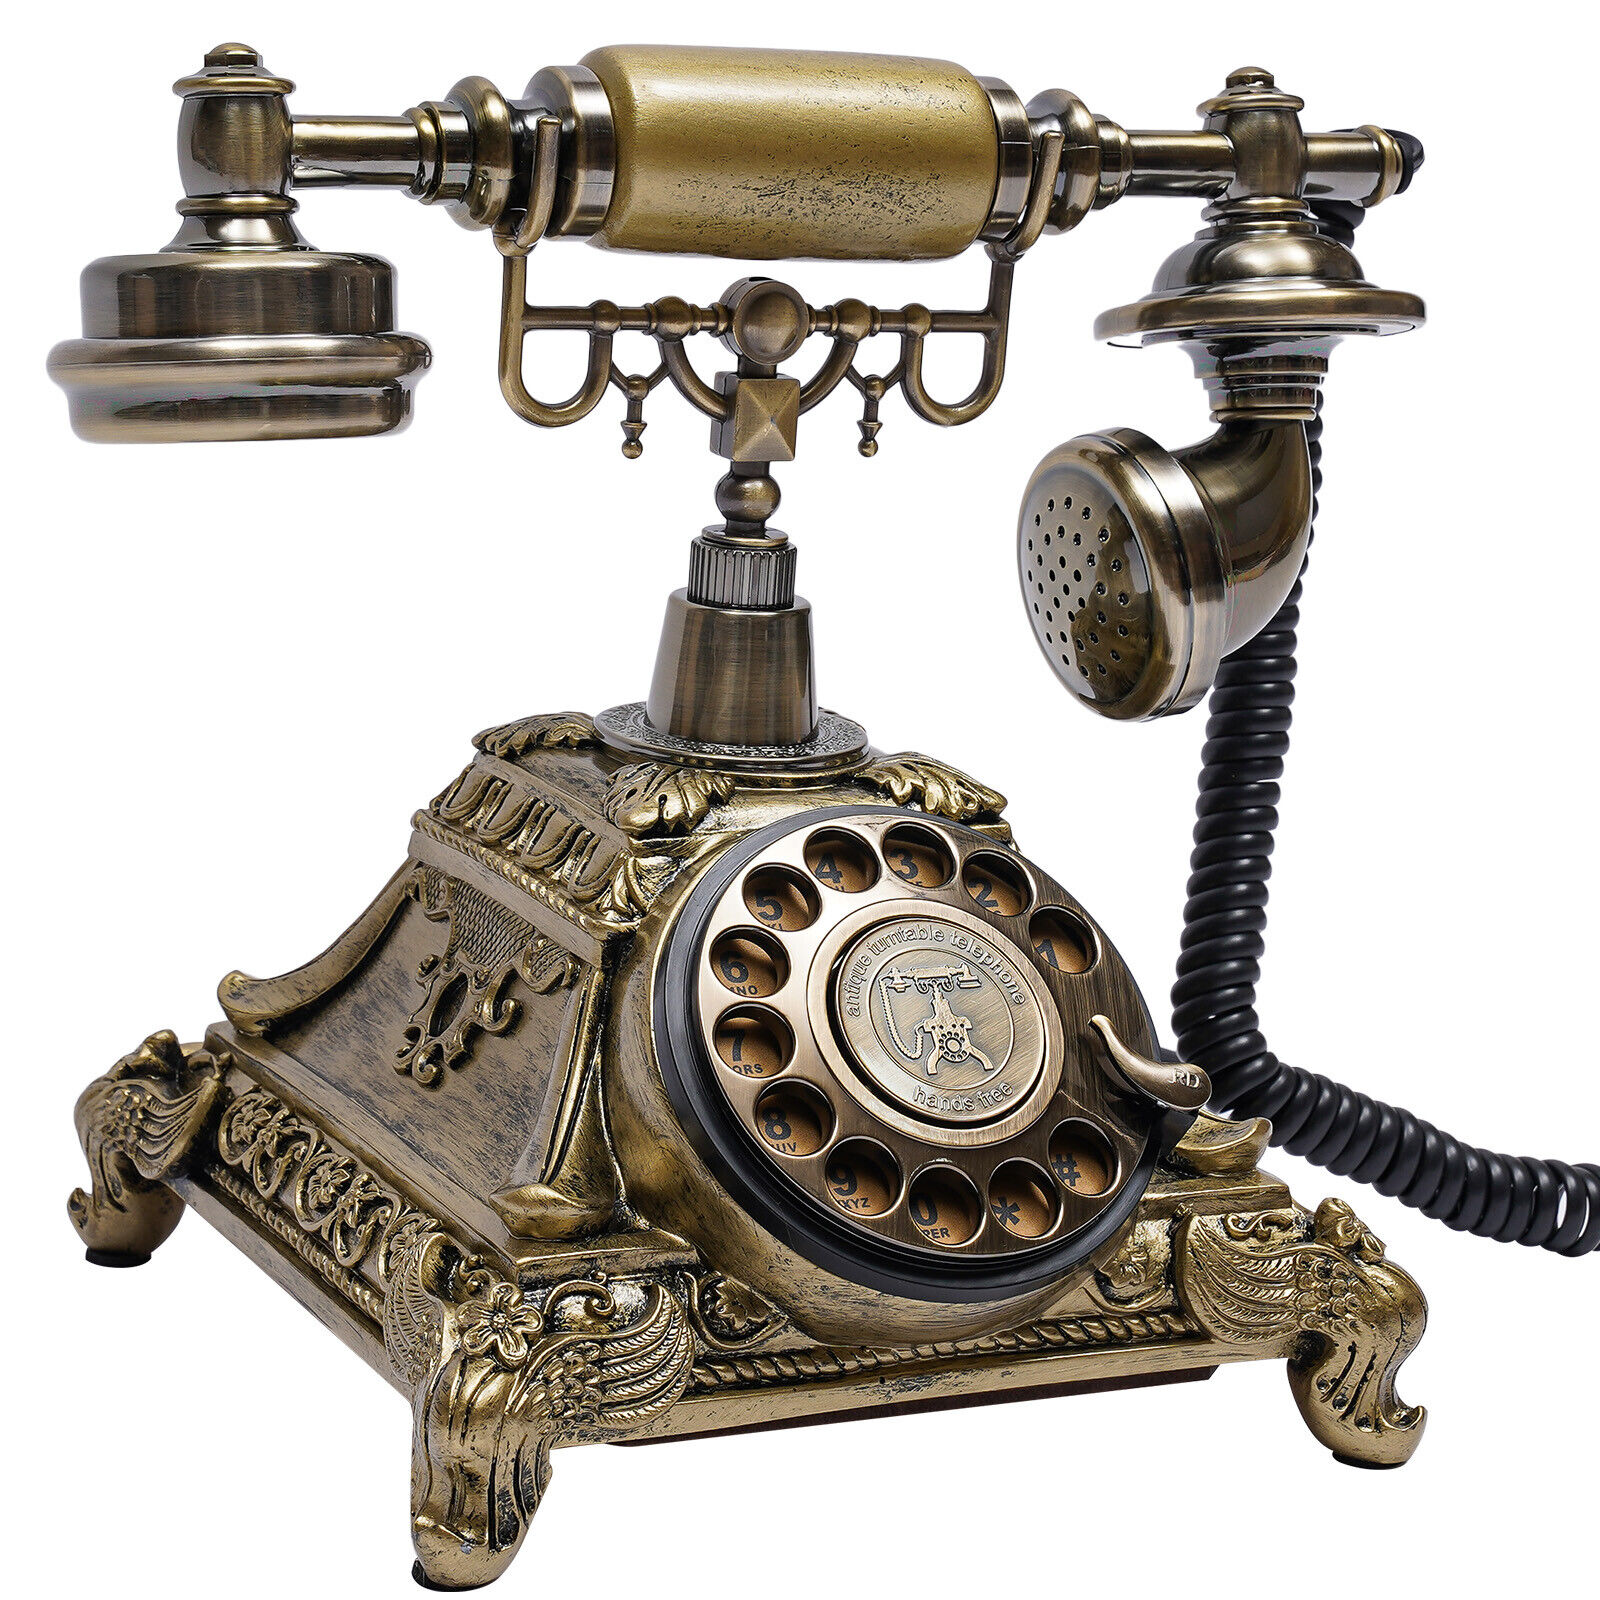 Vintage Retro Corded Telephone Home Office Desk Landline Phone Equipment New Unbranded Does not apply - фотография #7